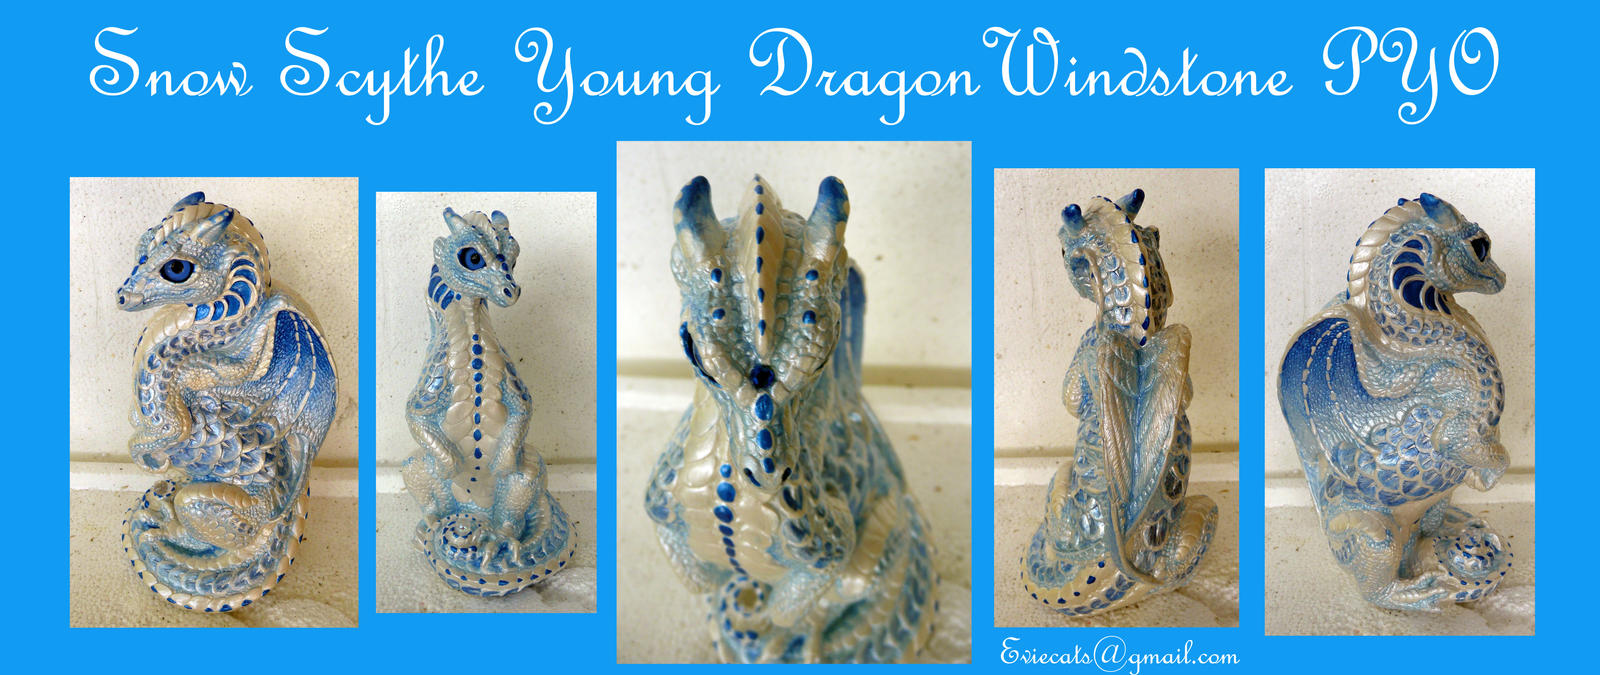 Snow Scythe Young Dragon Windstone PYO